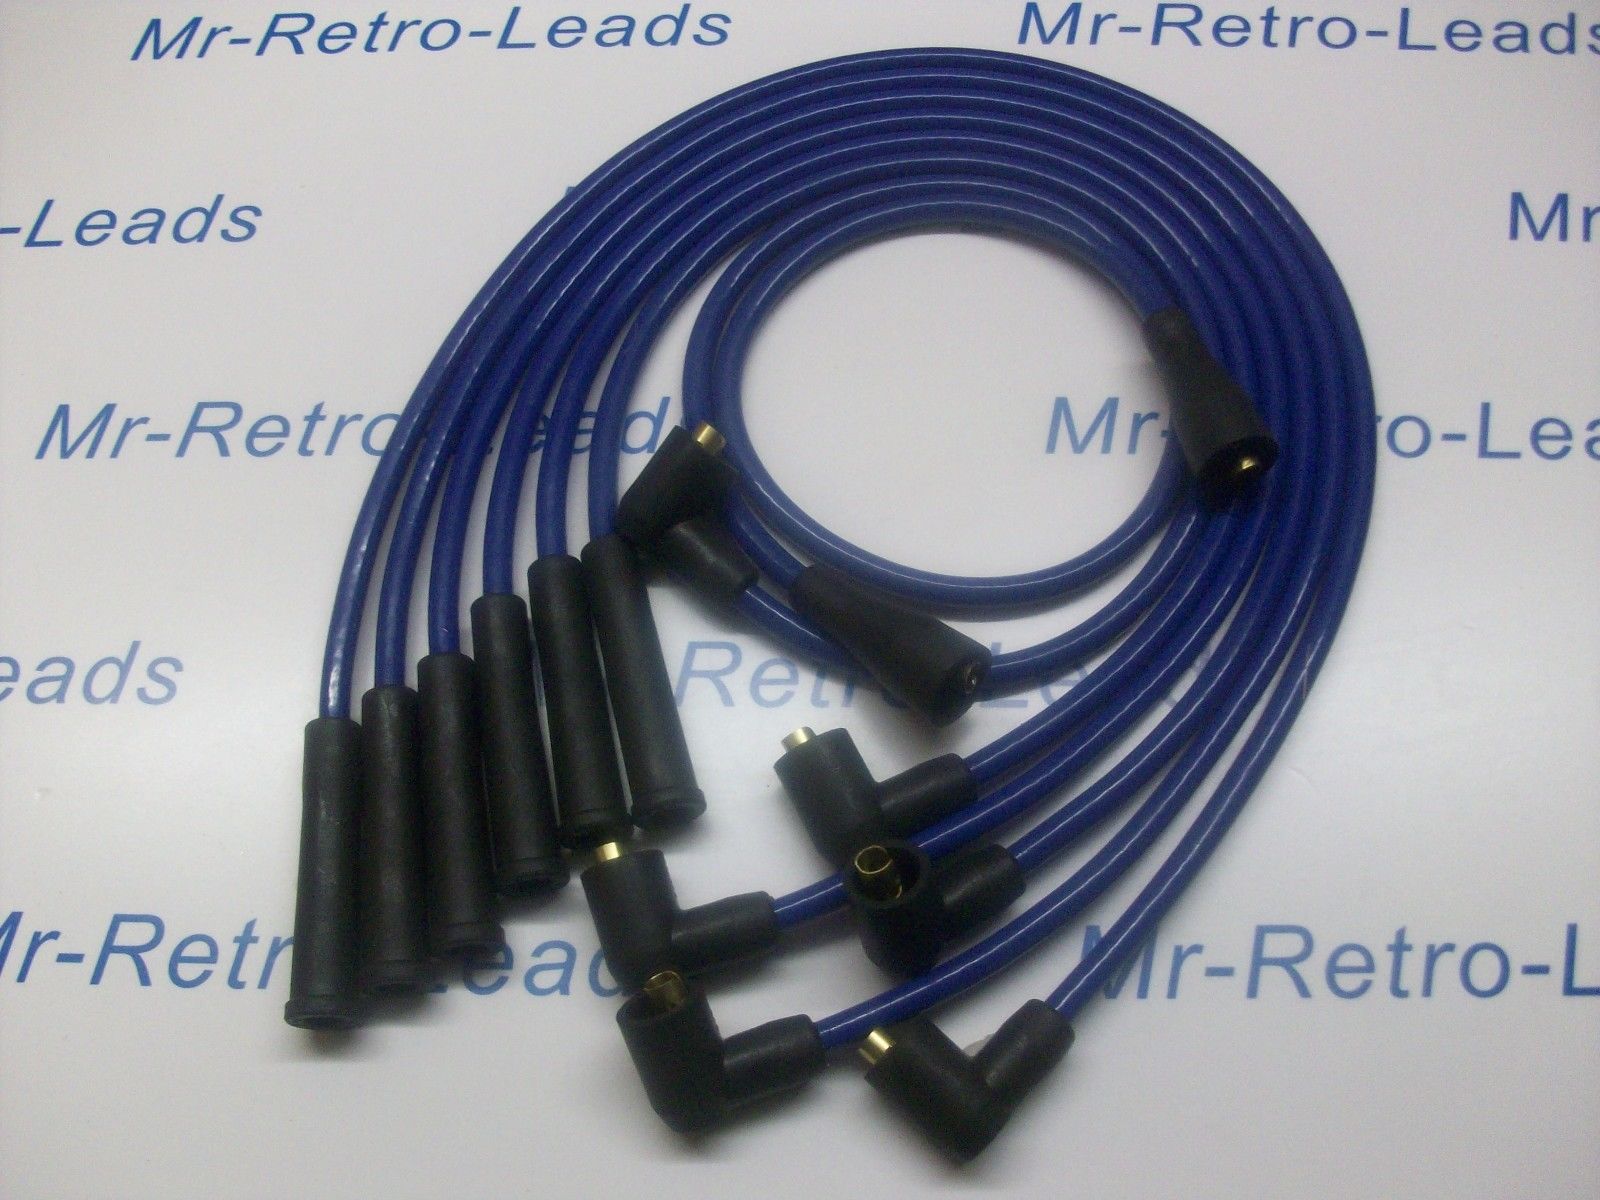 Ford Capri MK1 1600 Genuine Cambiare Ignition Cable HT Lead Kit 